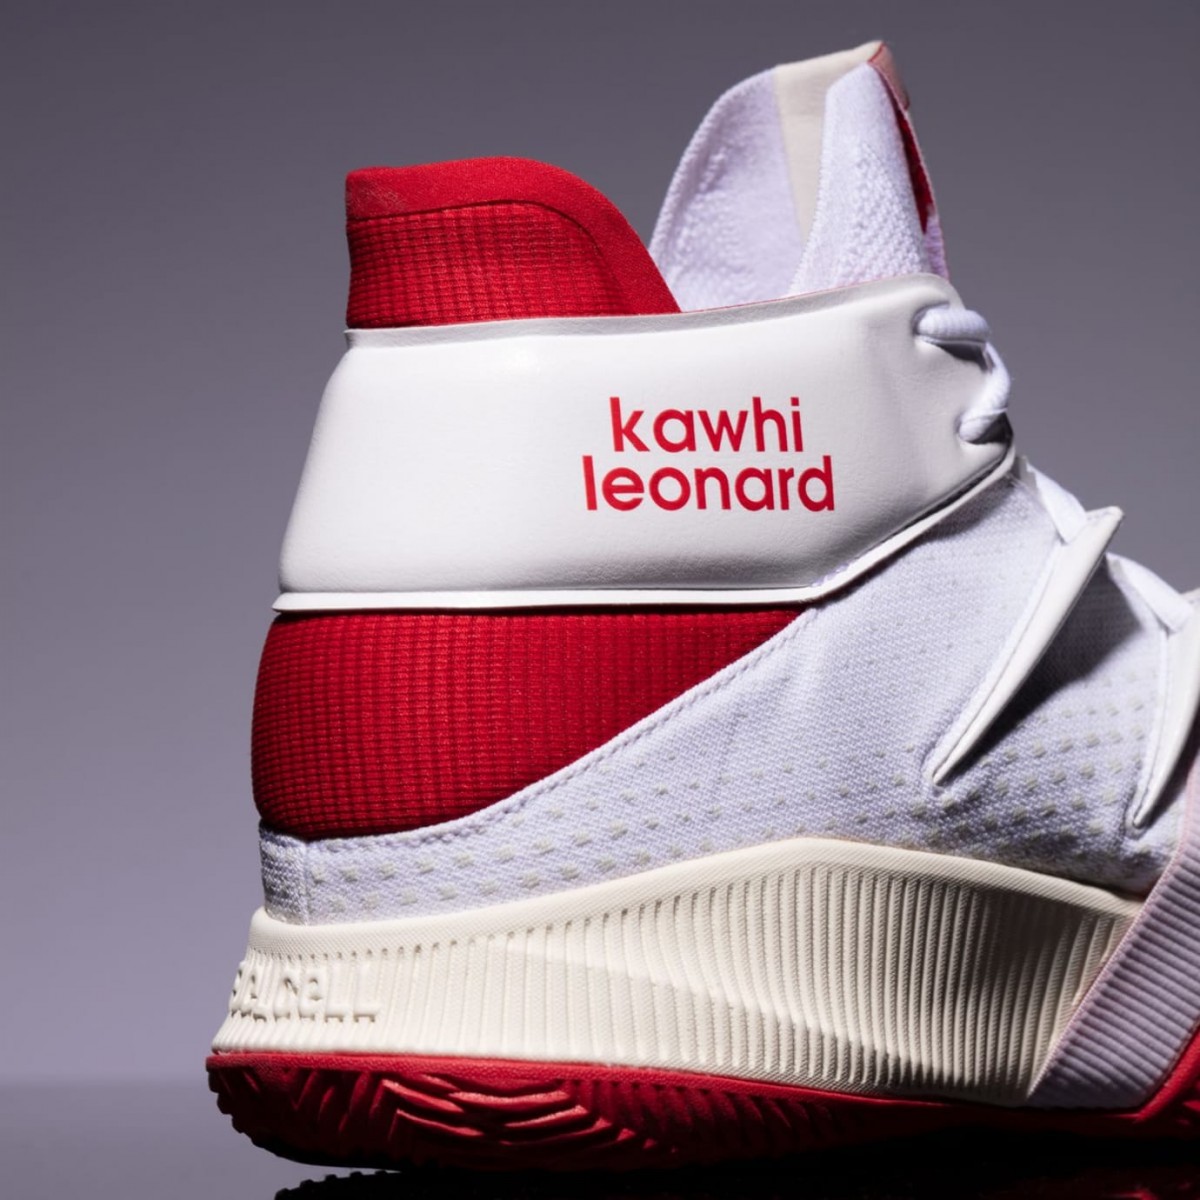 kawhi leonard's new balance sneakers